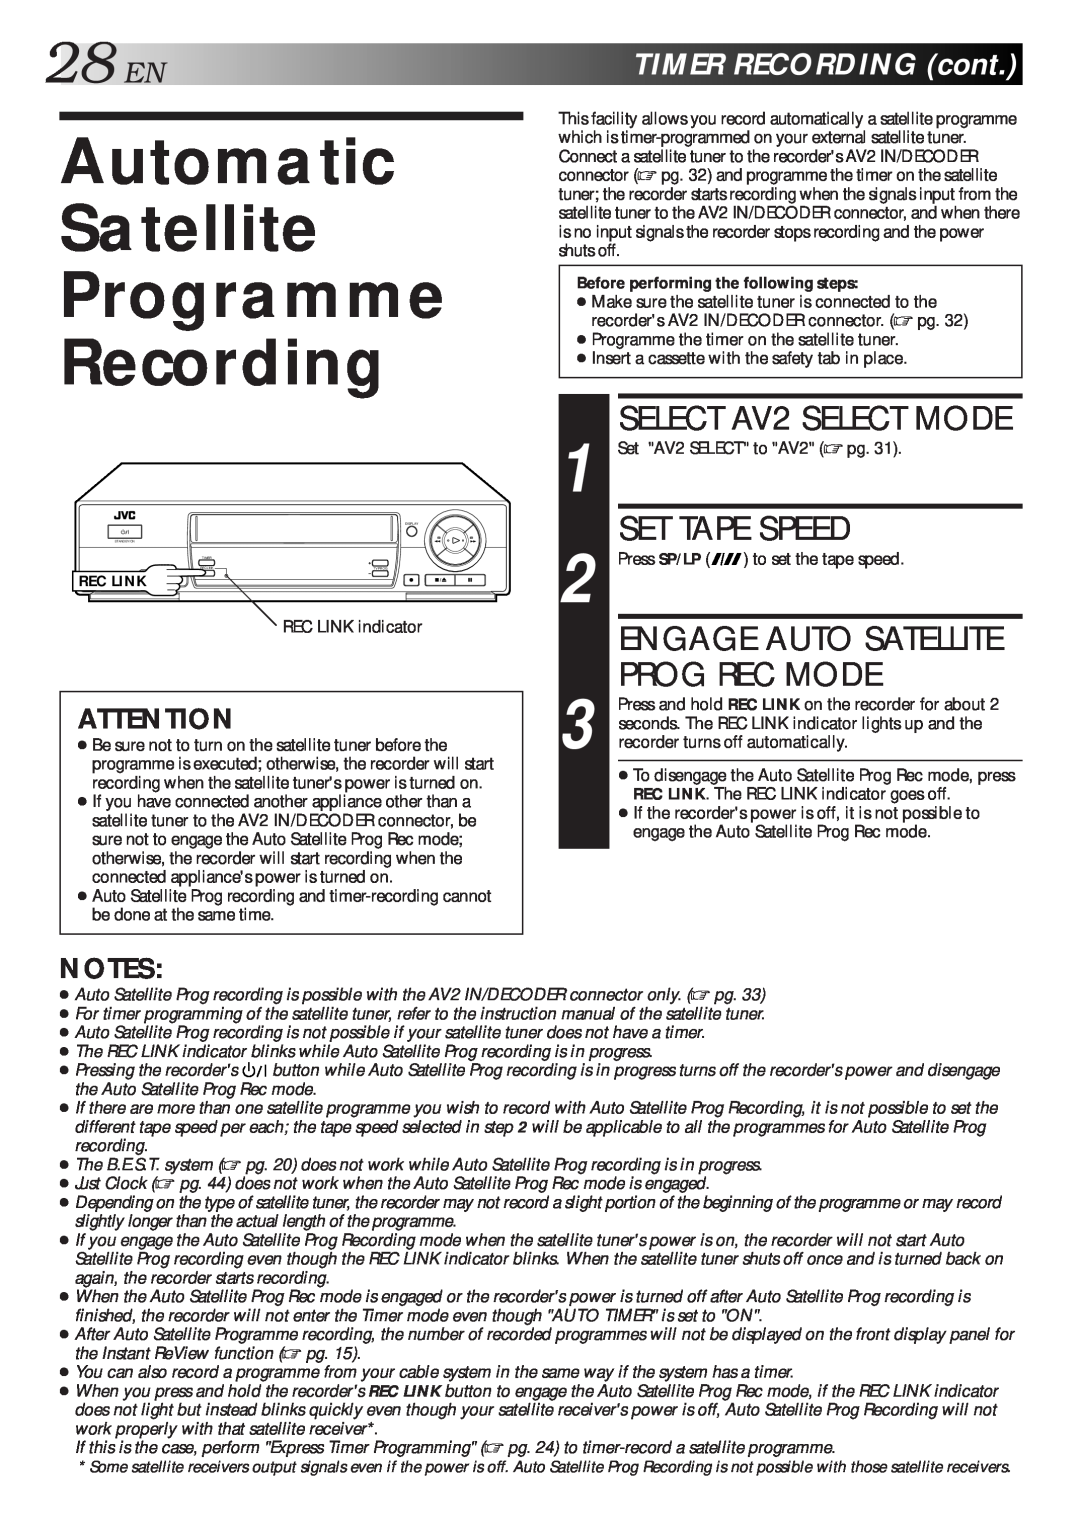 JVC HR-J712EU Automatic Satellite Programme Recording, Prog Rec Mode, 28ENTIMERRECORDINGcont, Engage Auto Satellite 